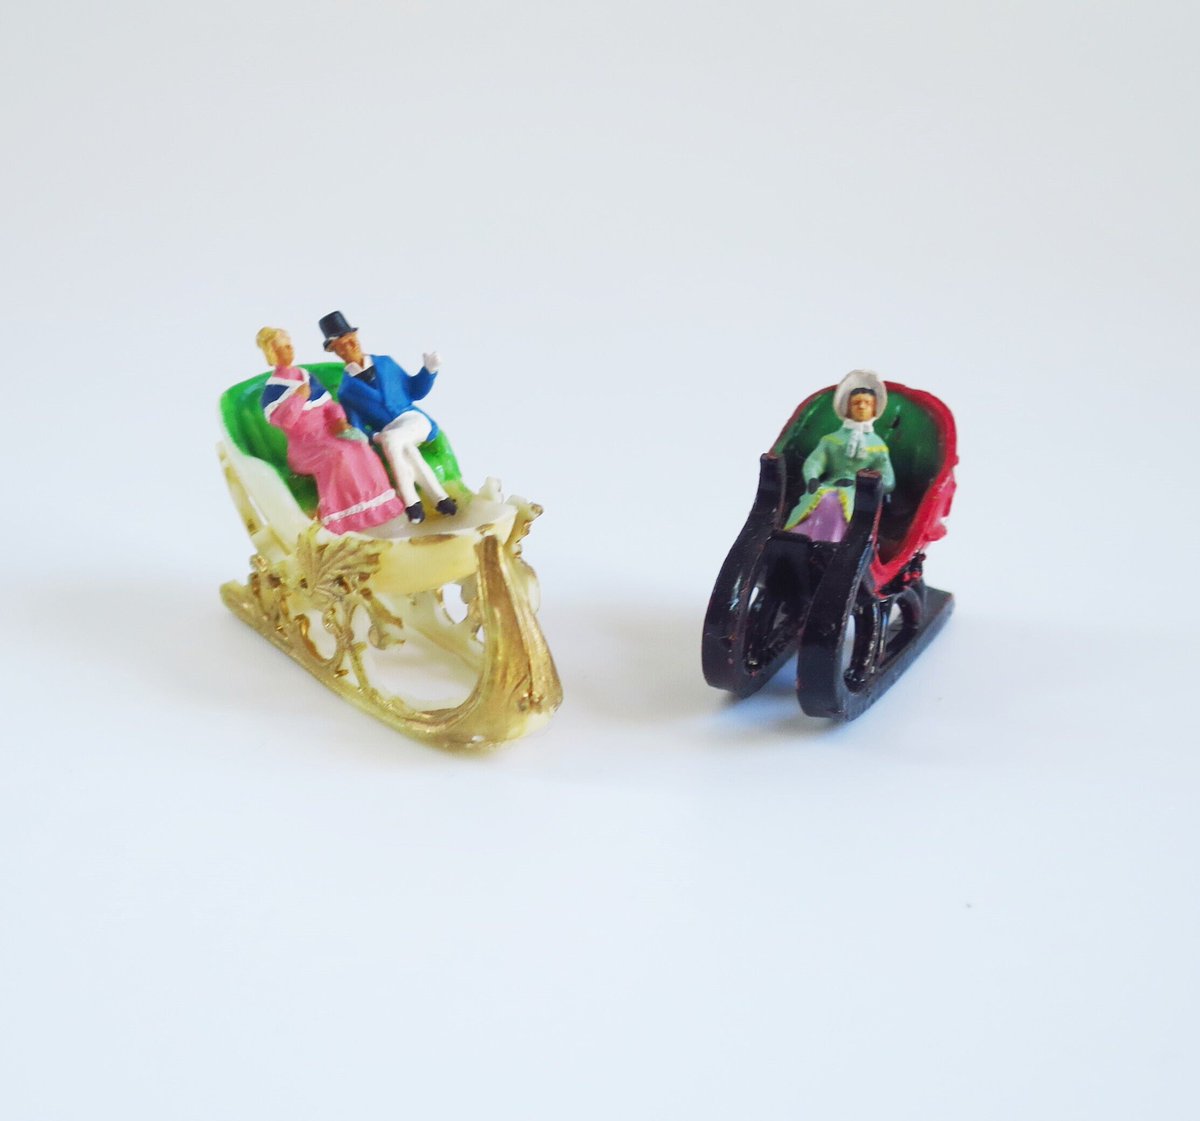 Tiny 1 inch Horse Drawn Carriage Set • Vintage Putz Figures • Wedding Miniature • SwirlingOrange11 tuppu.net/b72b2f7d #Dad2024 #Vintage4Sale #EtsyteamUnity #SMILEtt23